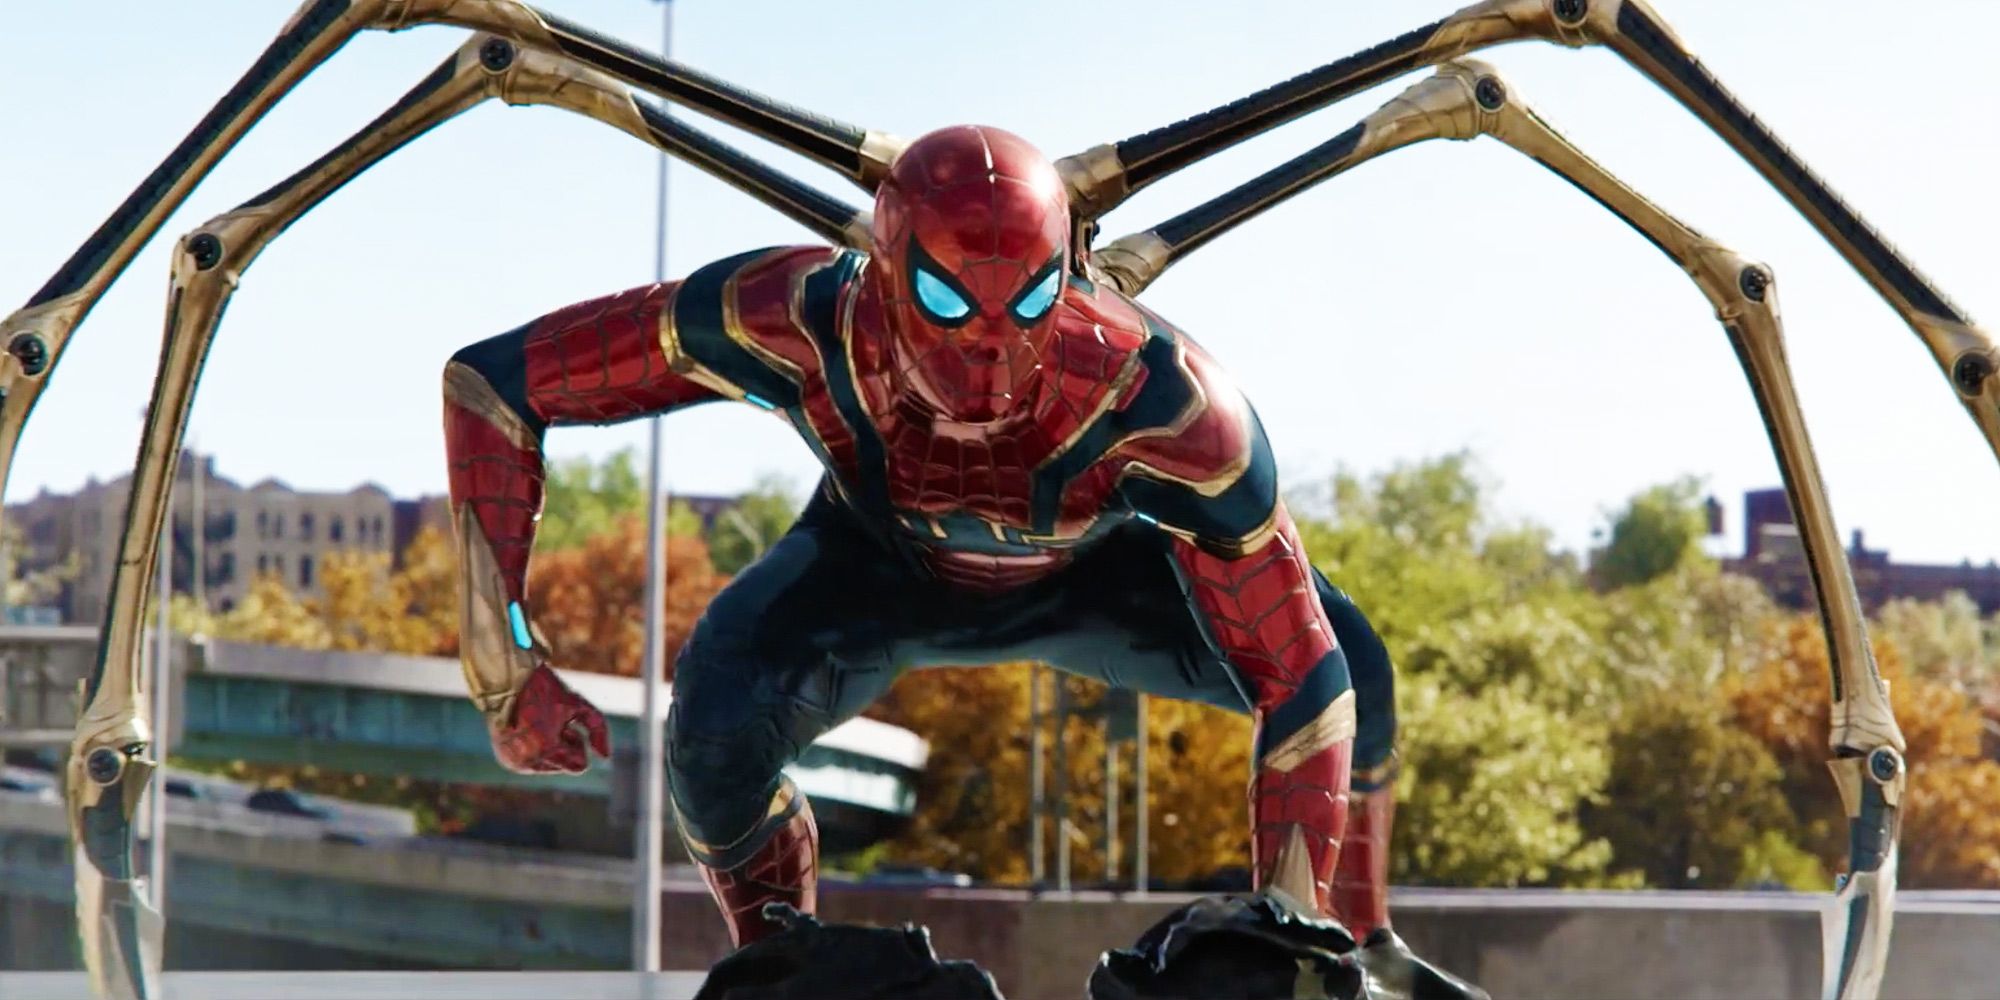 Spider-Man in the Iron Spider suit preparing to fight in Spider-Man: No Way Home